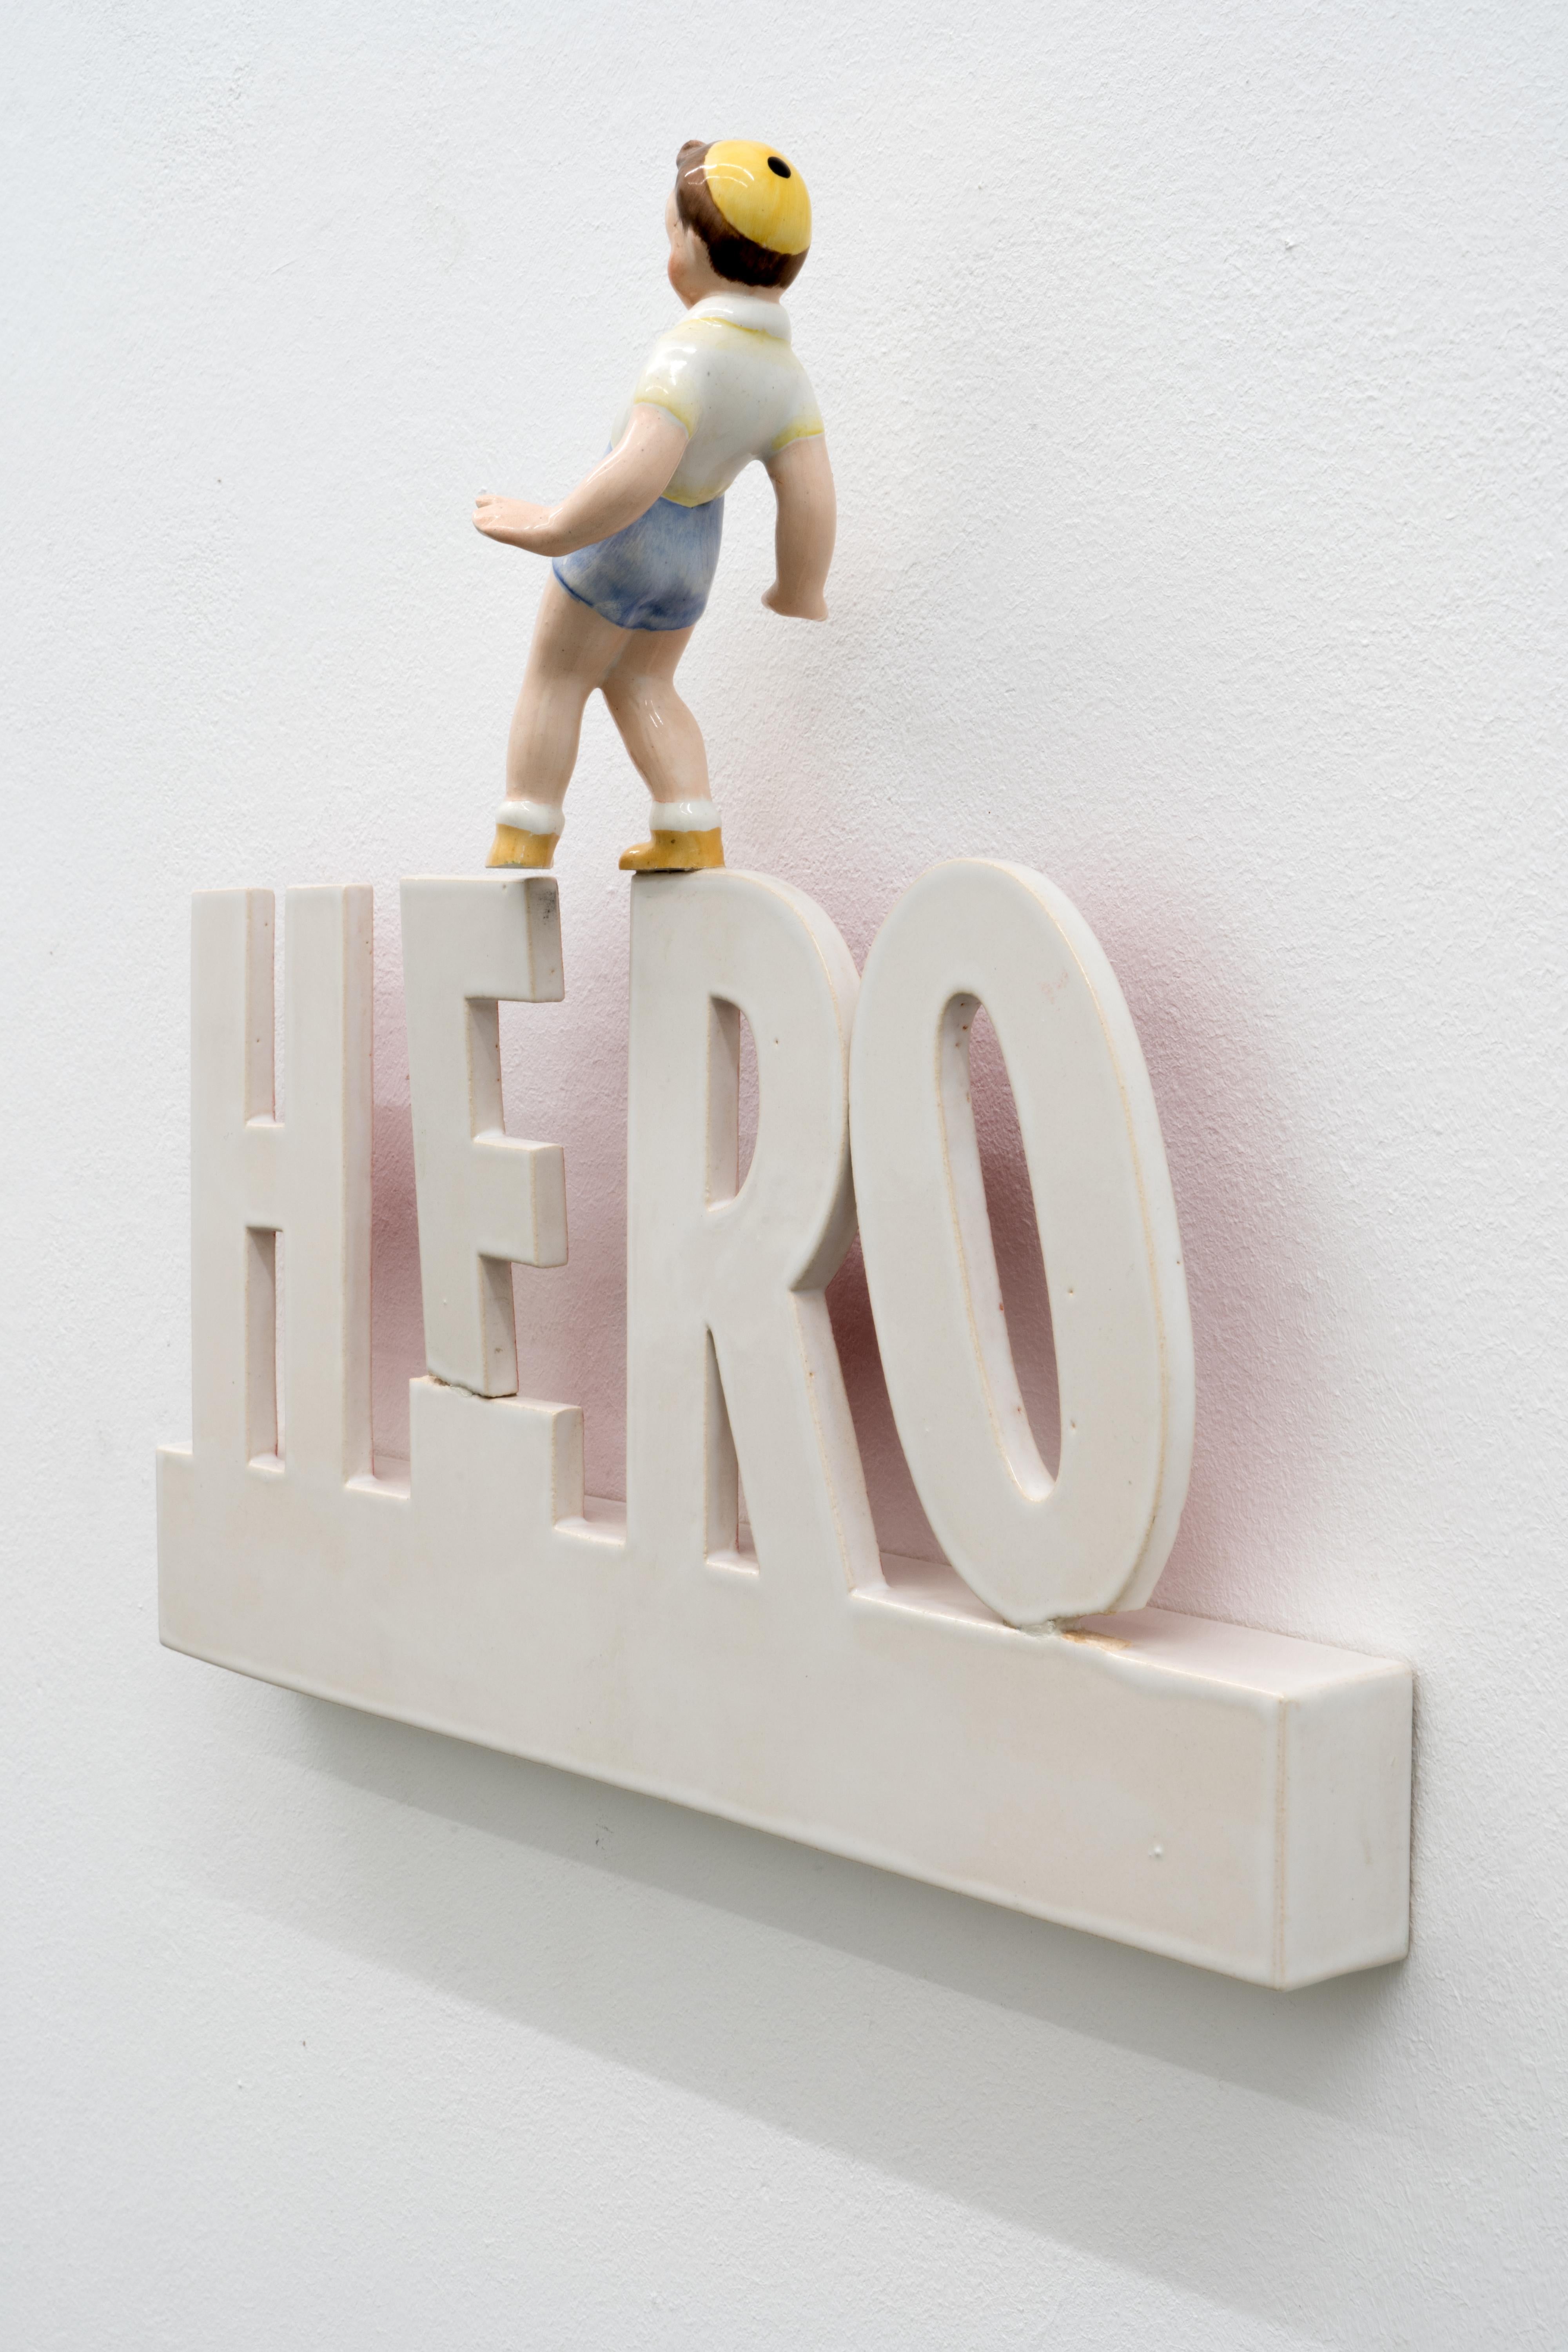 Hero - Contemporary Sculpture by Dana Widawski